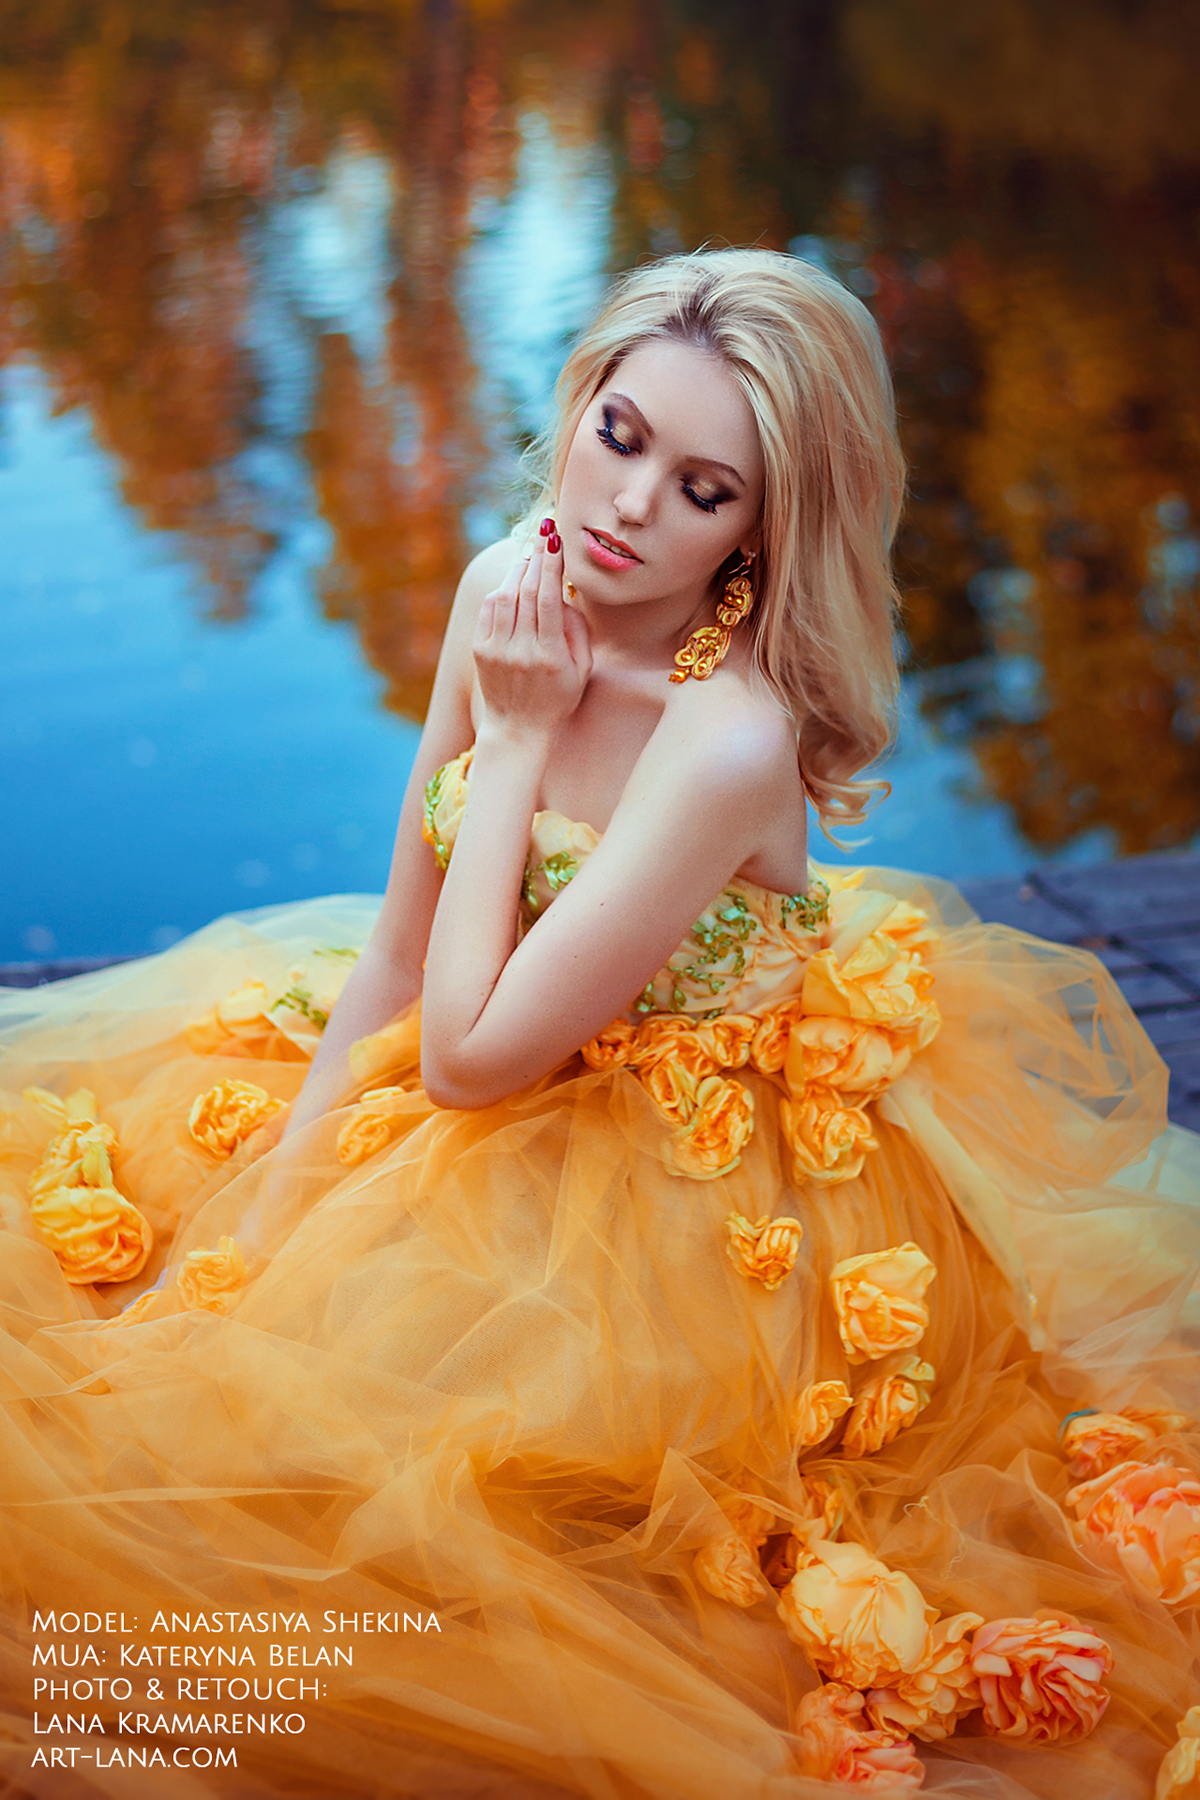 photoshoot lilac garden spring model blonde Flowers beauty blooms dress portrait light romantic colorful